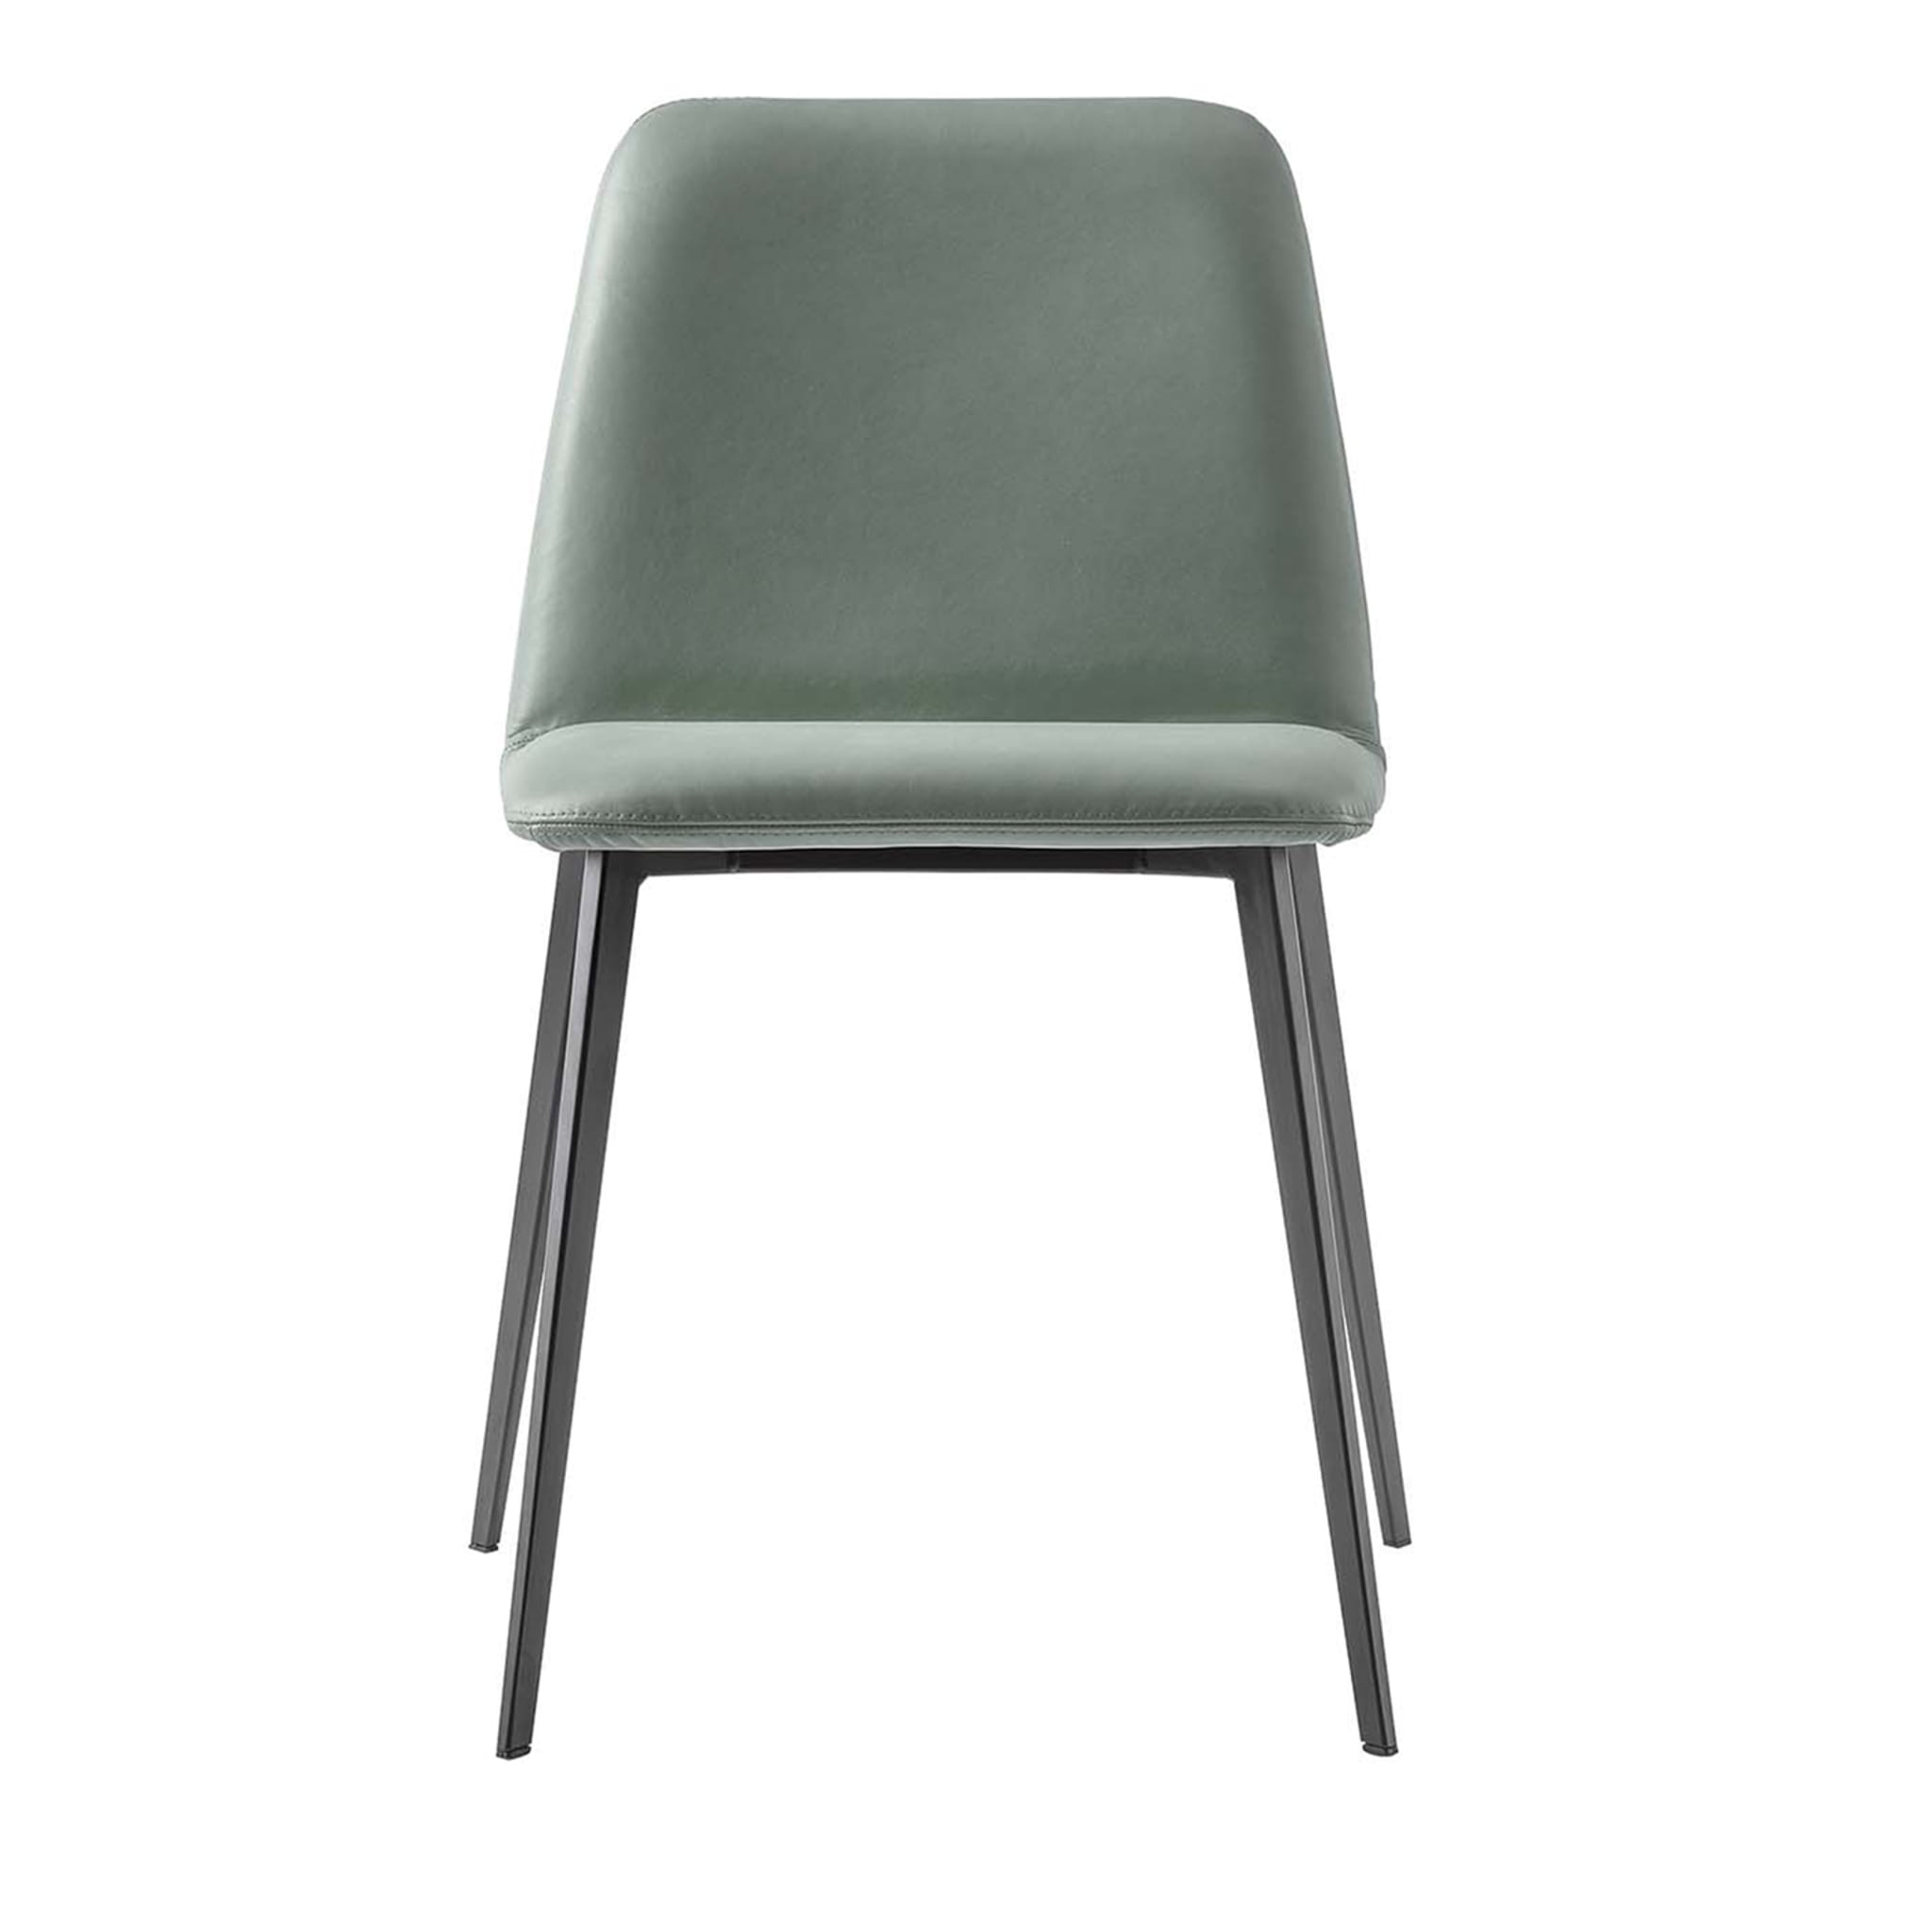 Bardot Grüner Stuhl von Emilio Nanni - Hauptansicht